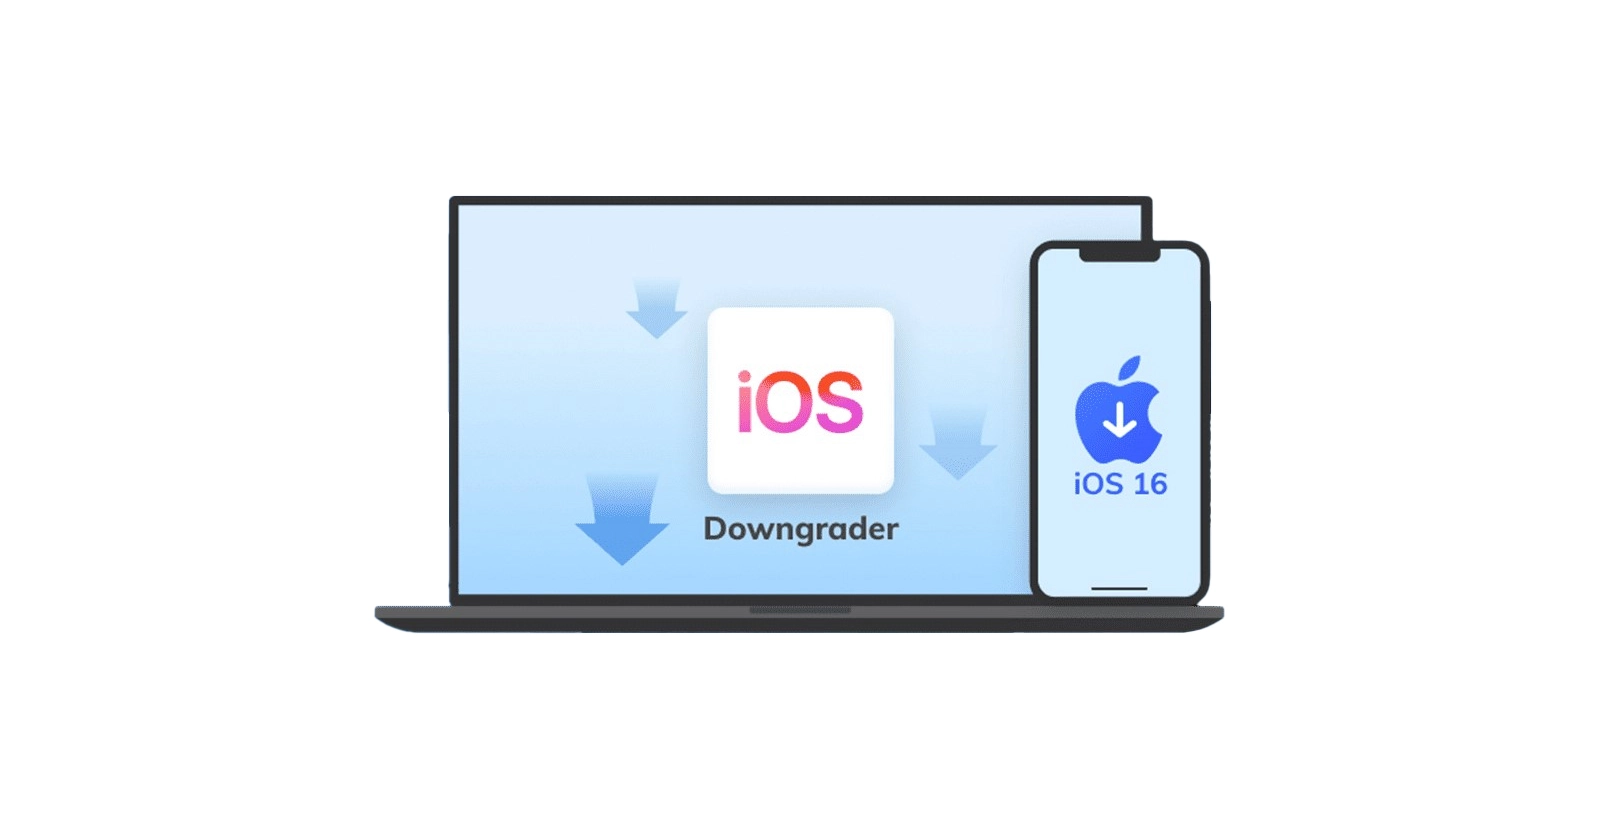 How to downgrade from iOS 17 to iOS 16 using UltFone Downgrade Tool